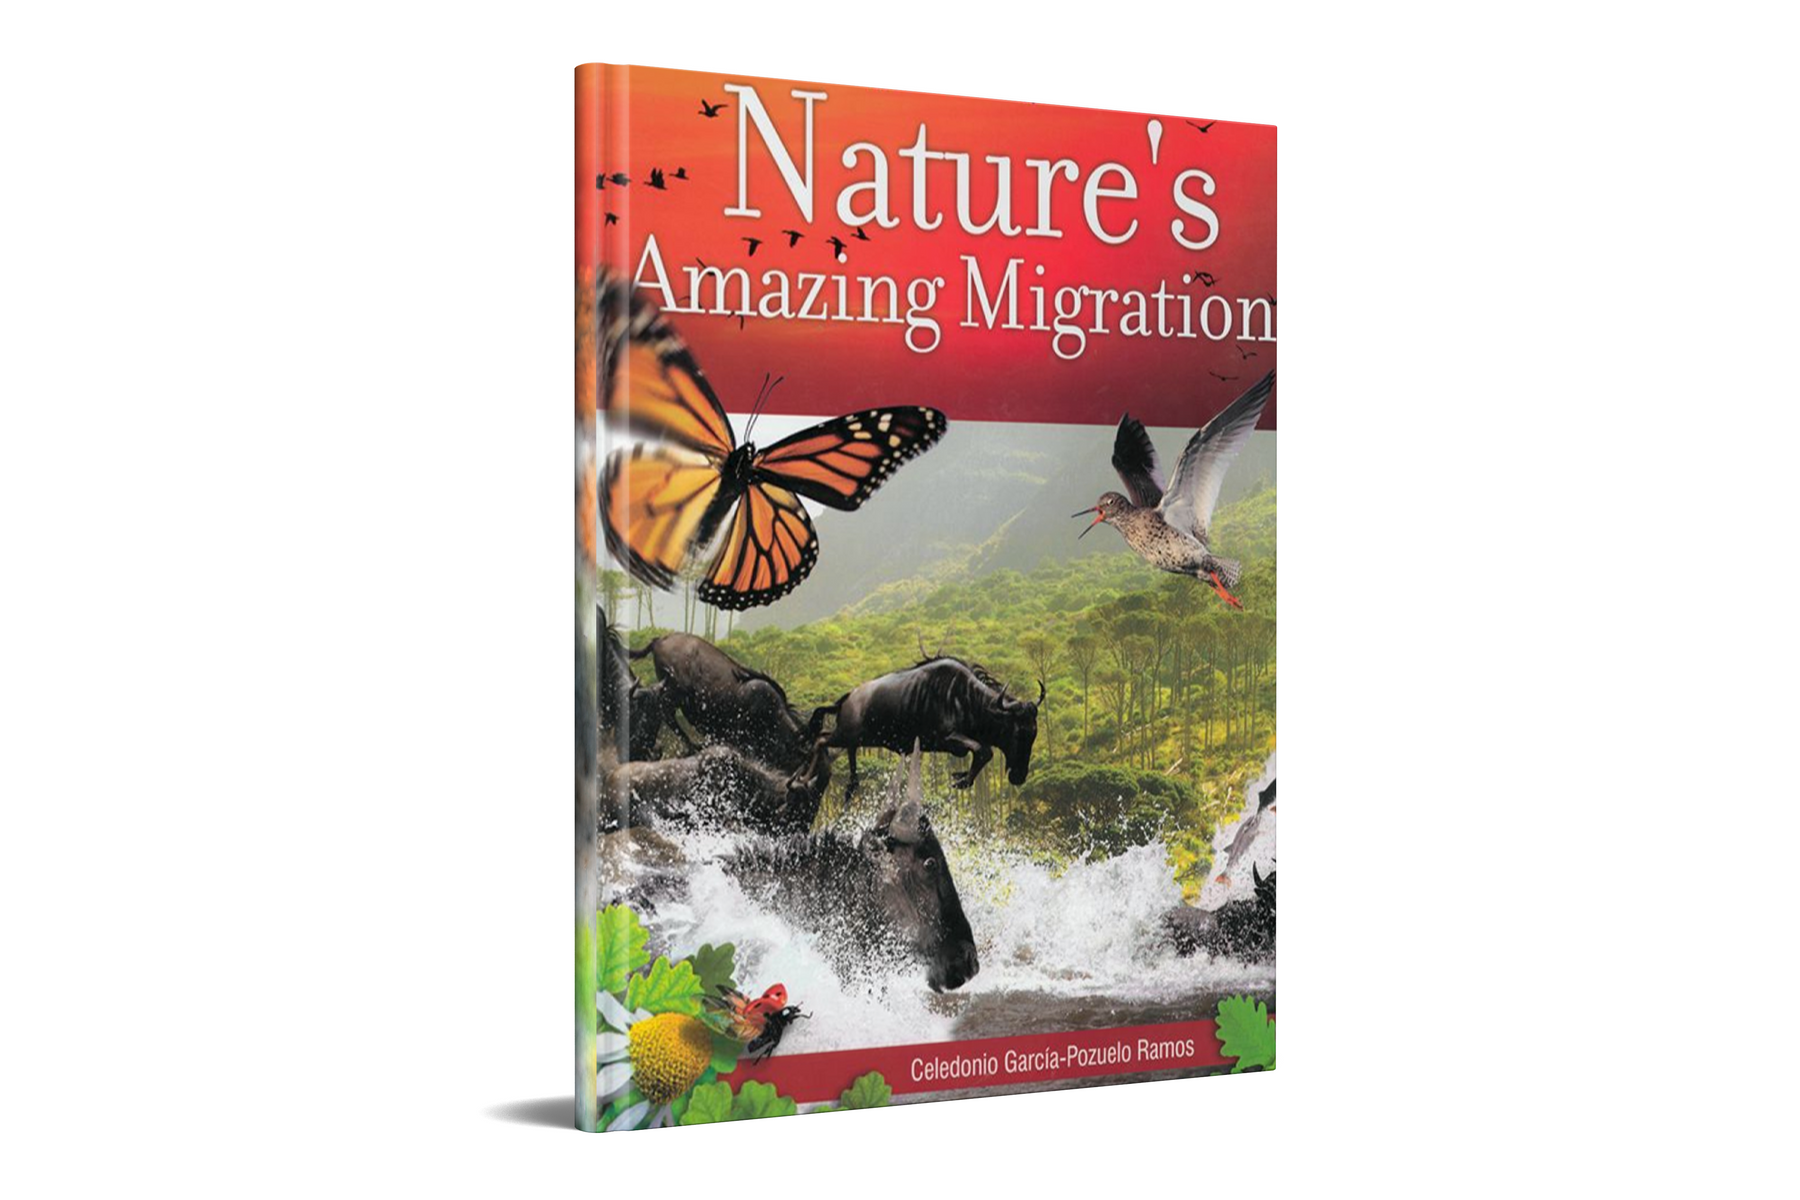 Natures Amazing Migrations by Safeliz